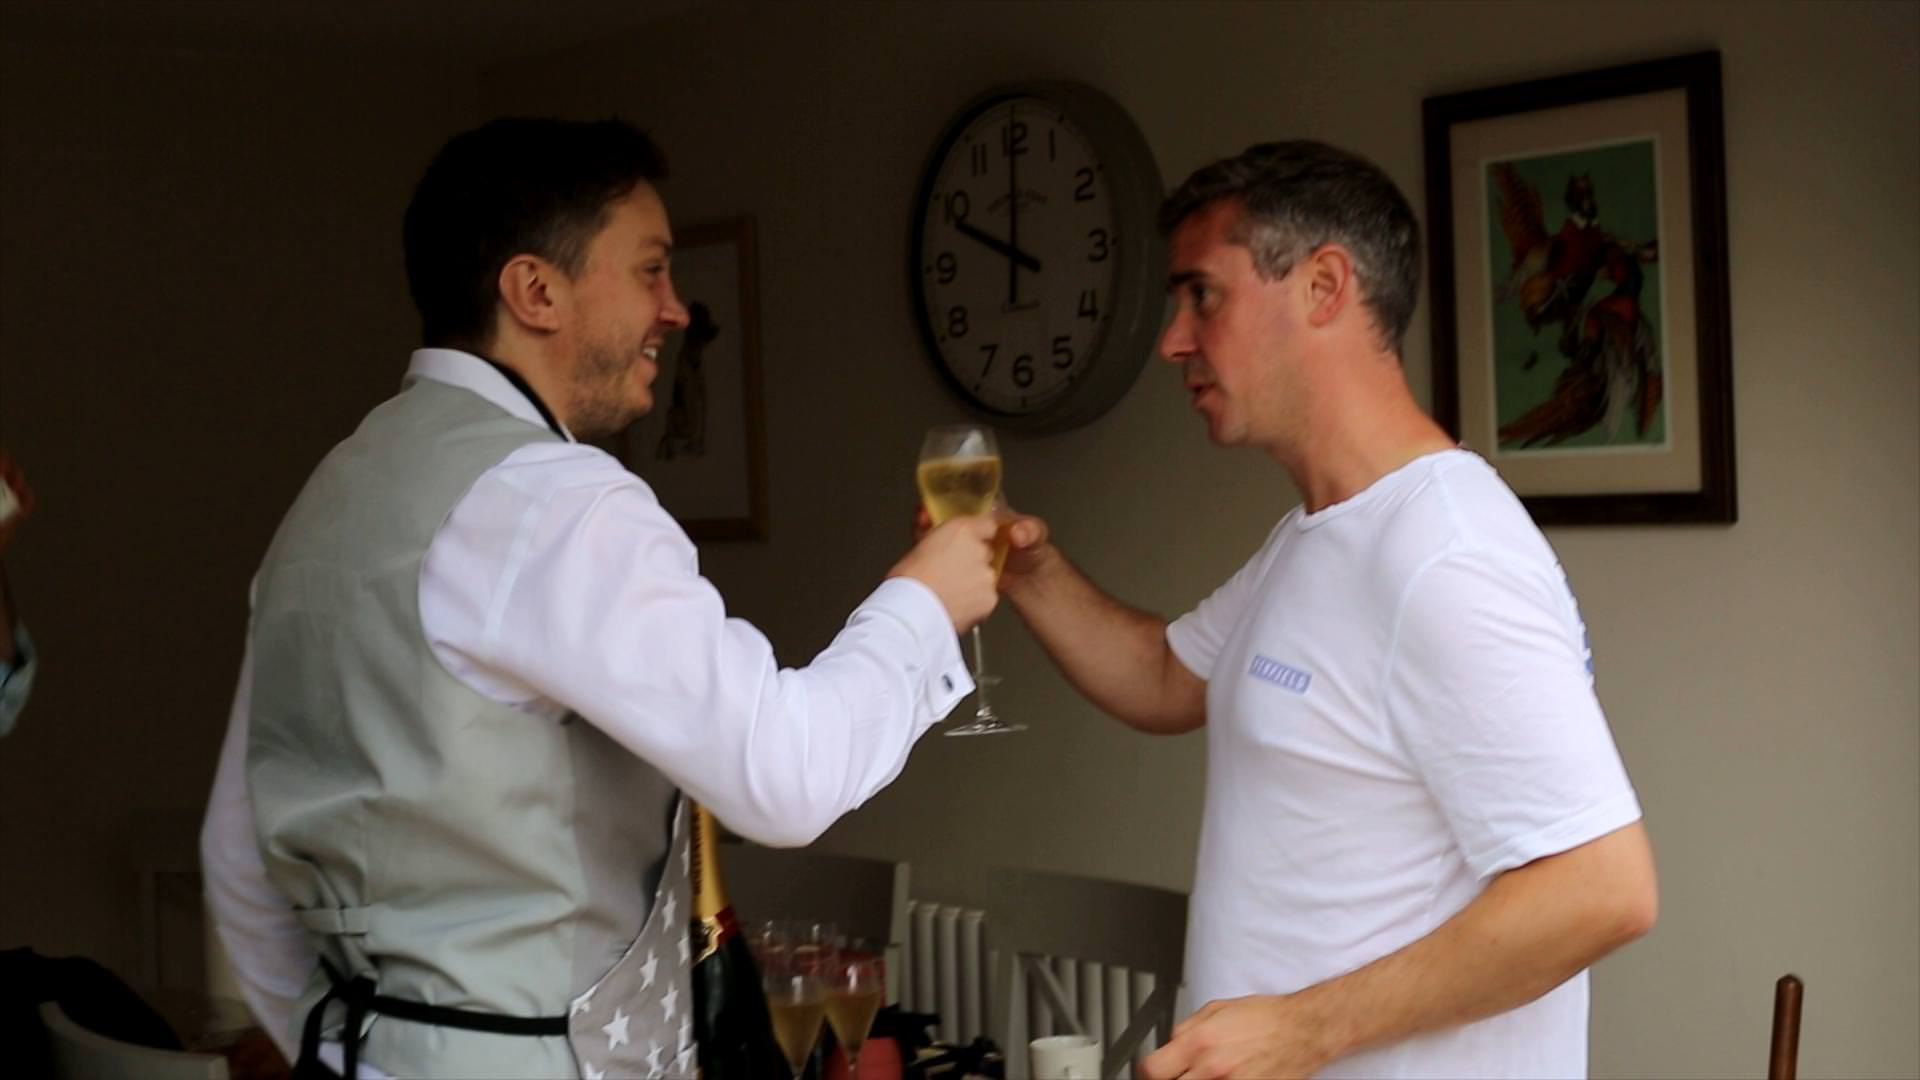 groom cheers champagne glass with groomsman